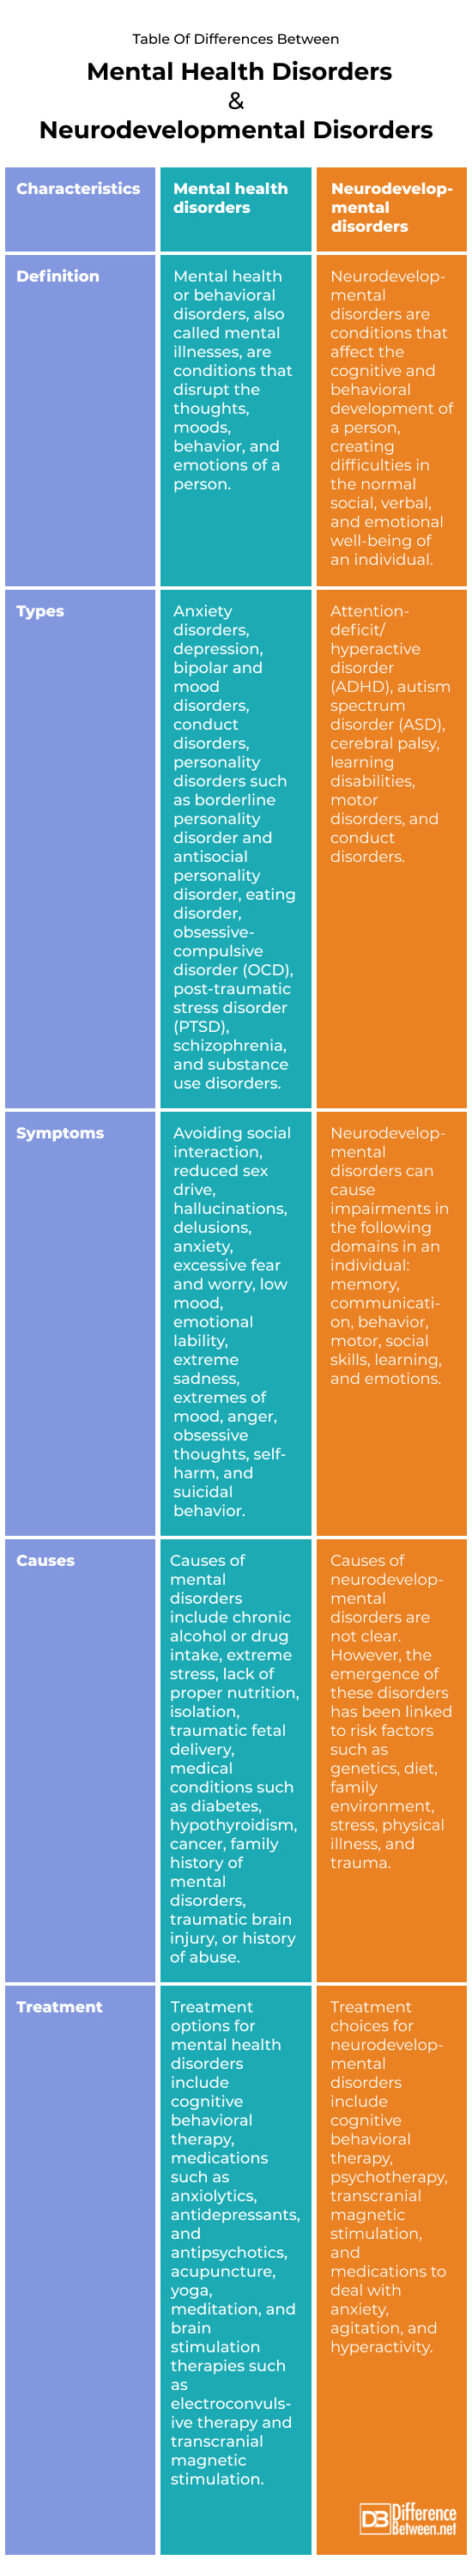 Mental-health-disorders-and-Neurodevelopmental-disorders-min-1